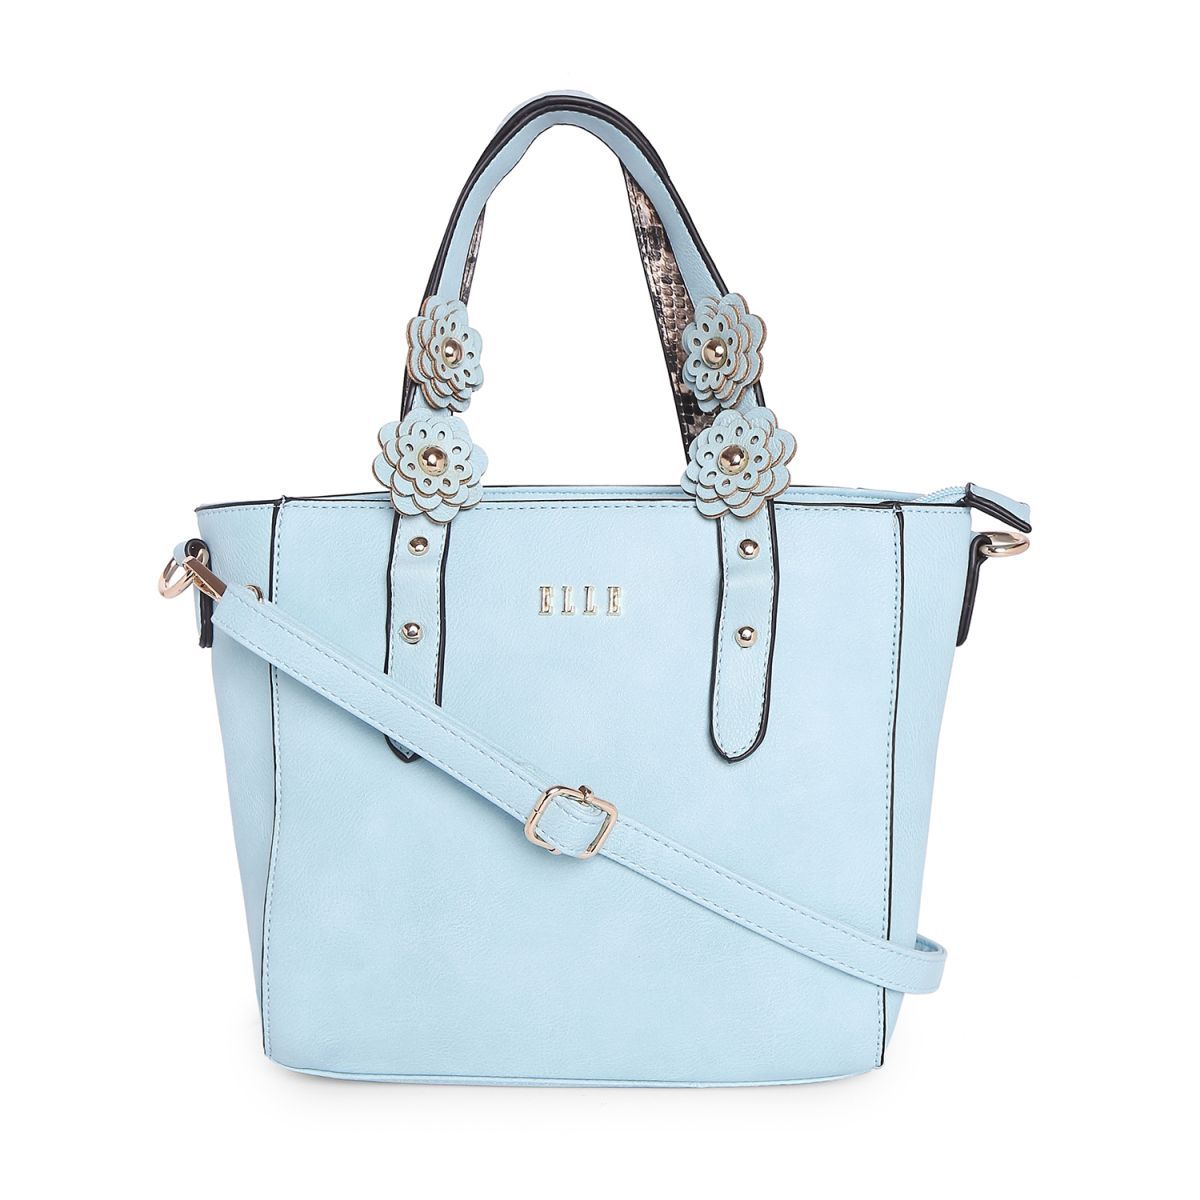 Bogg Bags Original Bogg Bag in Light Blue - Handbags & Purses | Hallmark